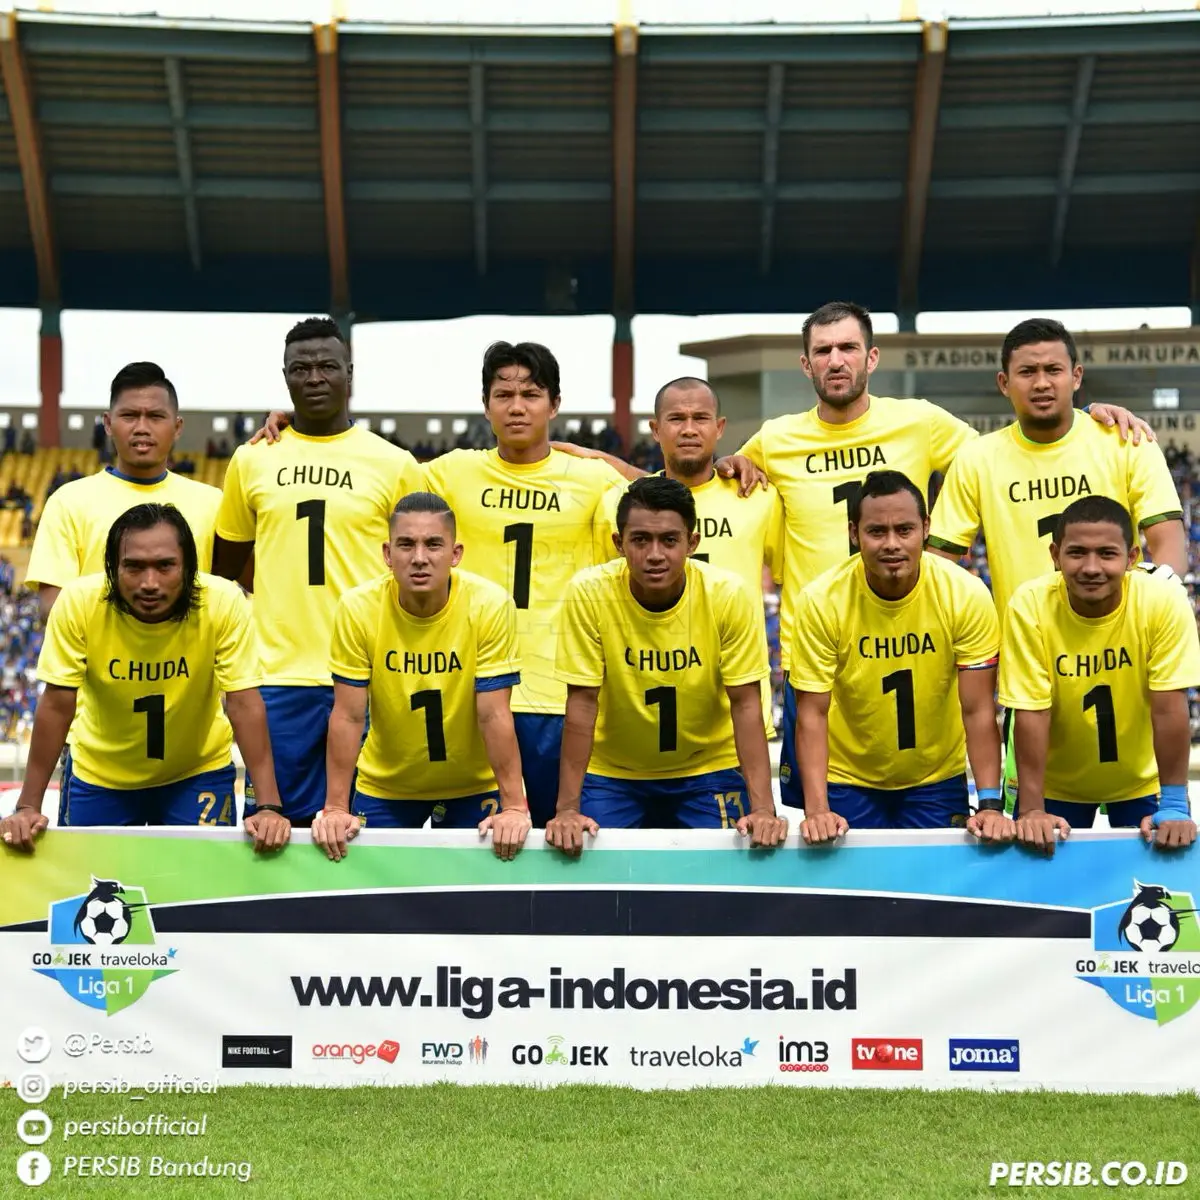 Persib Bandung (twitter.com/persib)